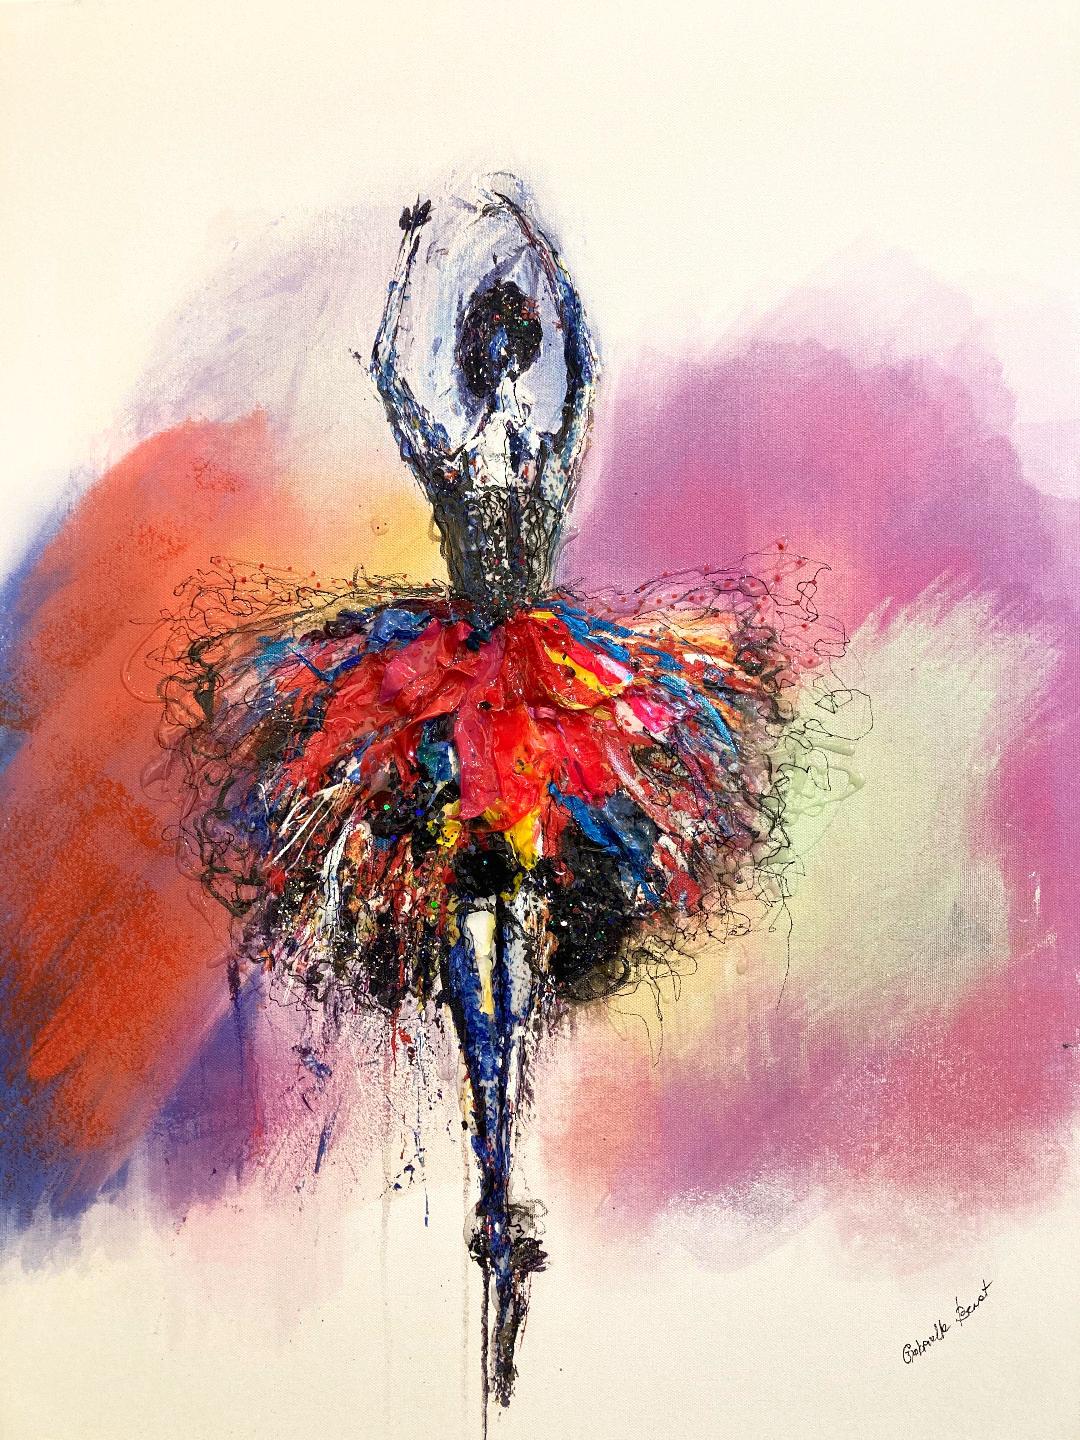 Gabrielle Benot, "Spotlight", Contemporary Ballet Painting on Canvas